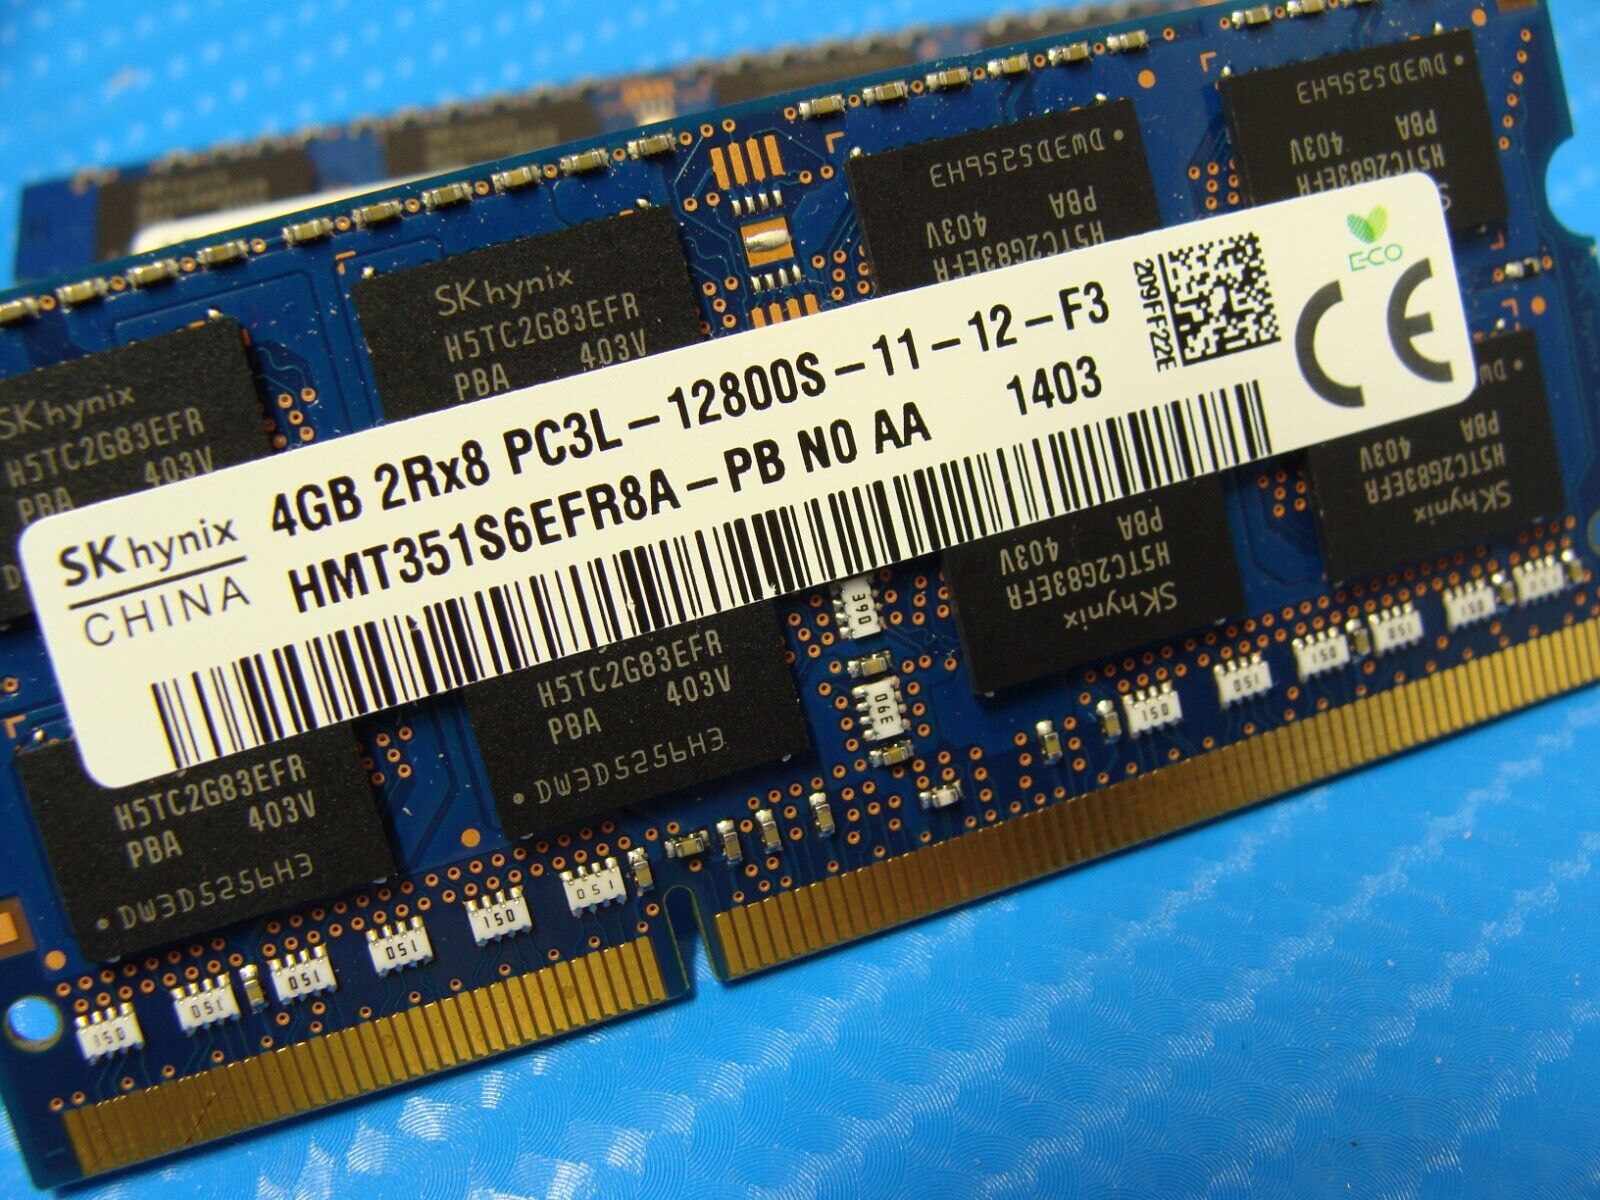 Dell 7537 SK Hynix 8GB (2x4GB) PC3L-12800S Memory RAM SO-DIMM HMT351S6EFR8A-PB